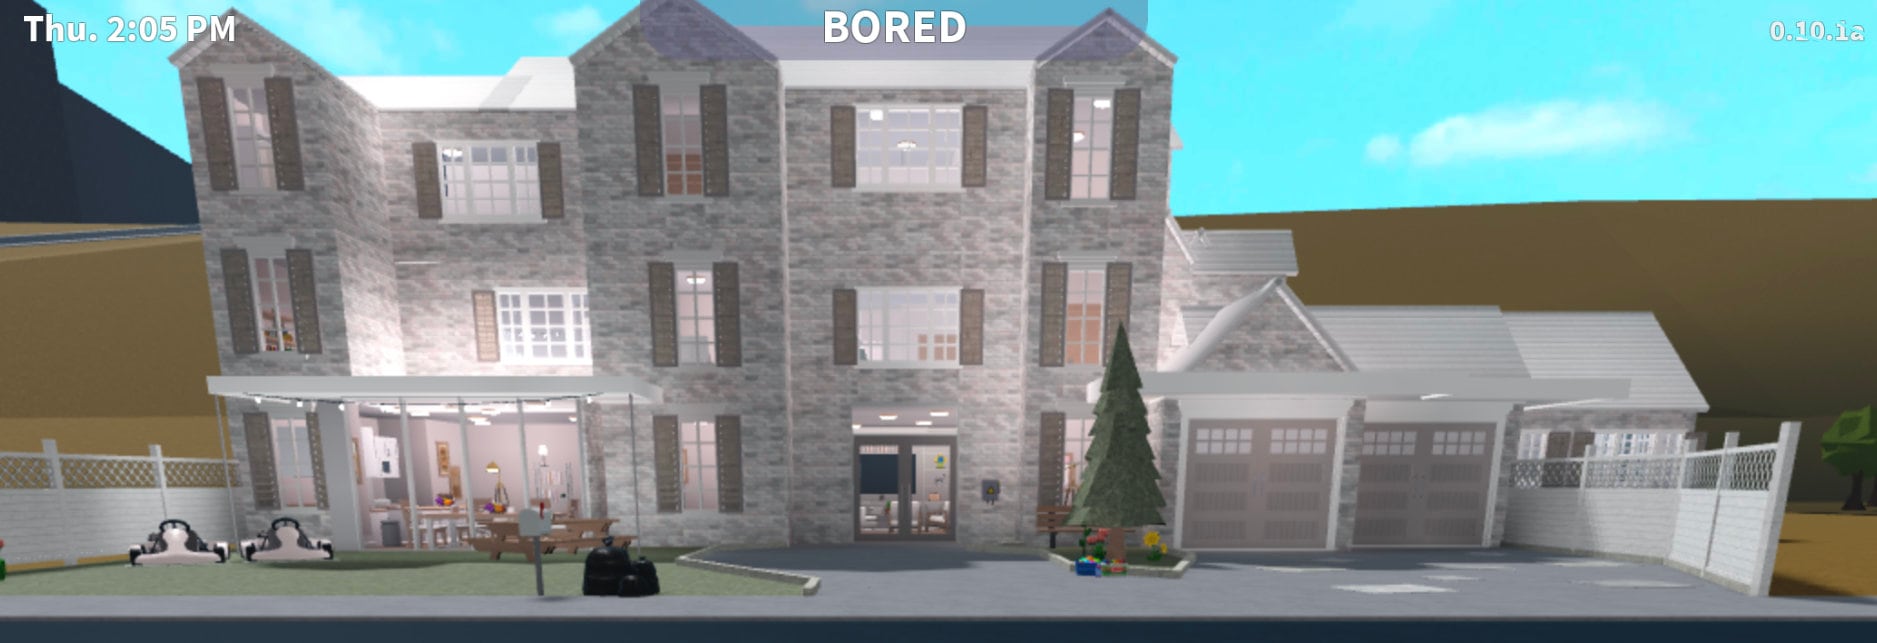 Realistic bloxburg family home + layout, #bloxburghouse #bloxburg #b, mud room